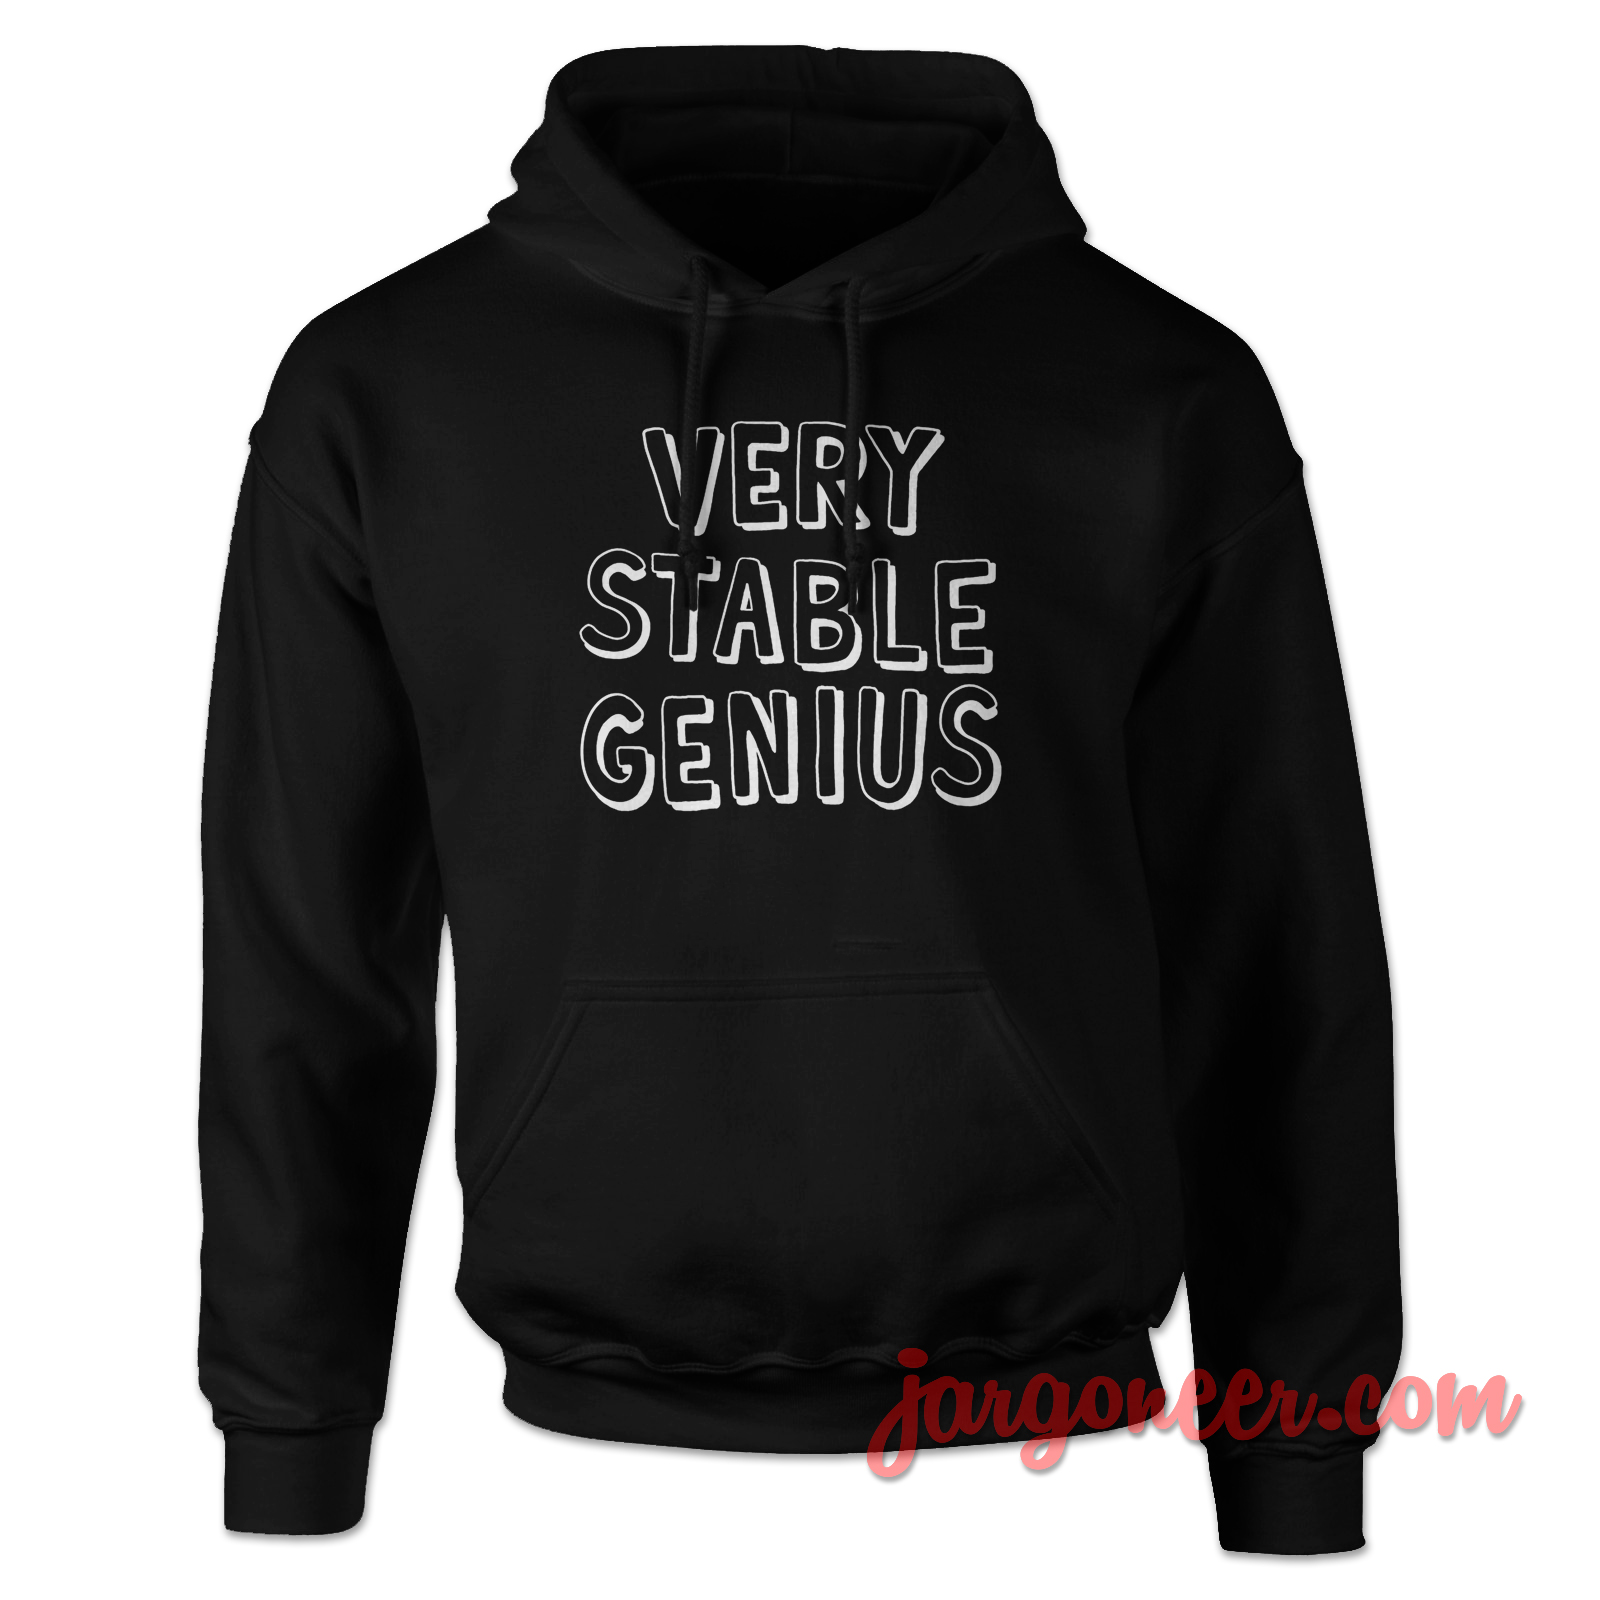 Very Stable Genius - Shop Unique Graphic Cool Shirt Designs